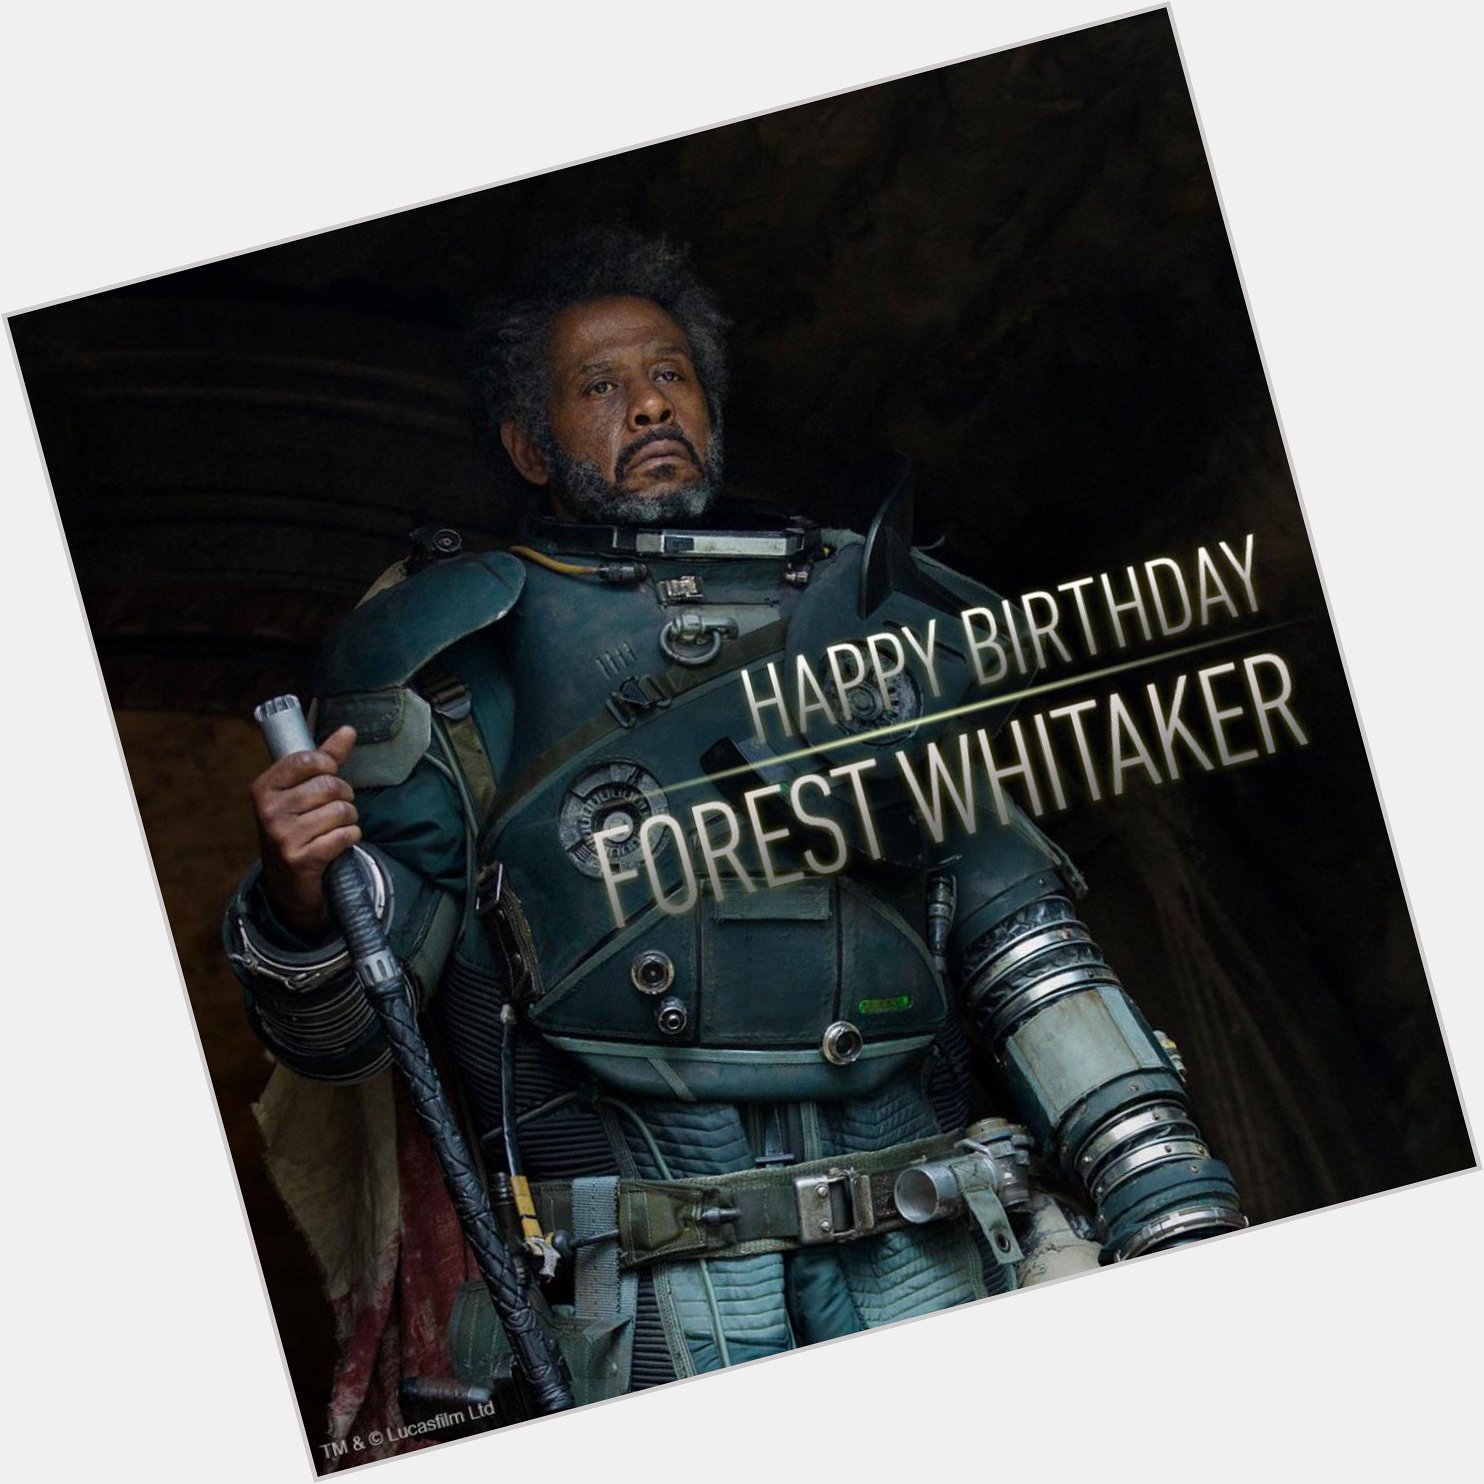 Happy 56th birthday Forest Whitaker 